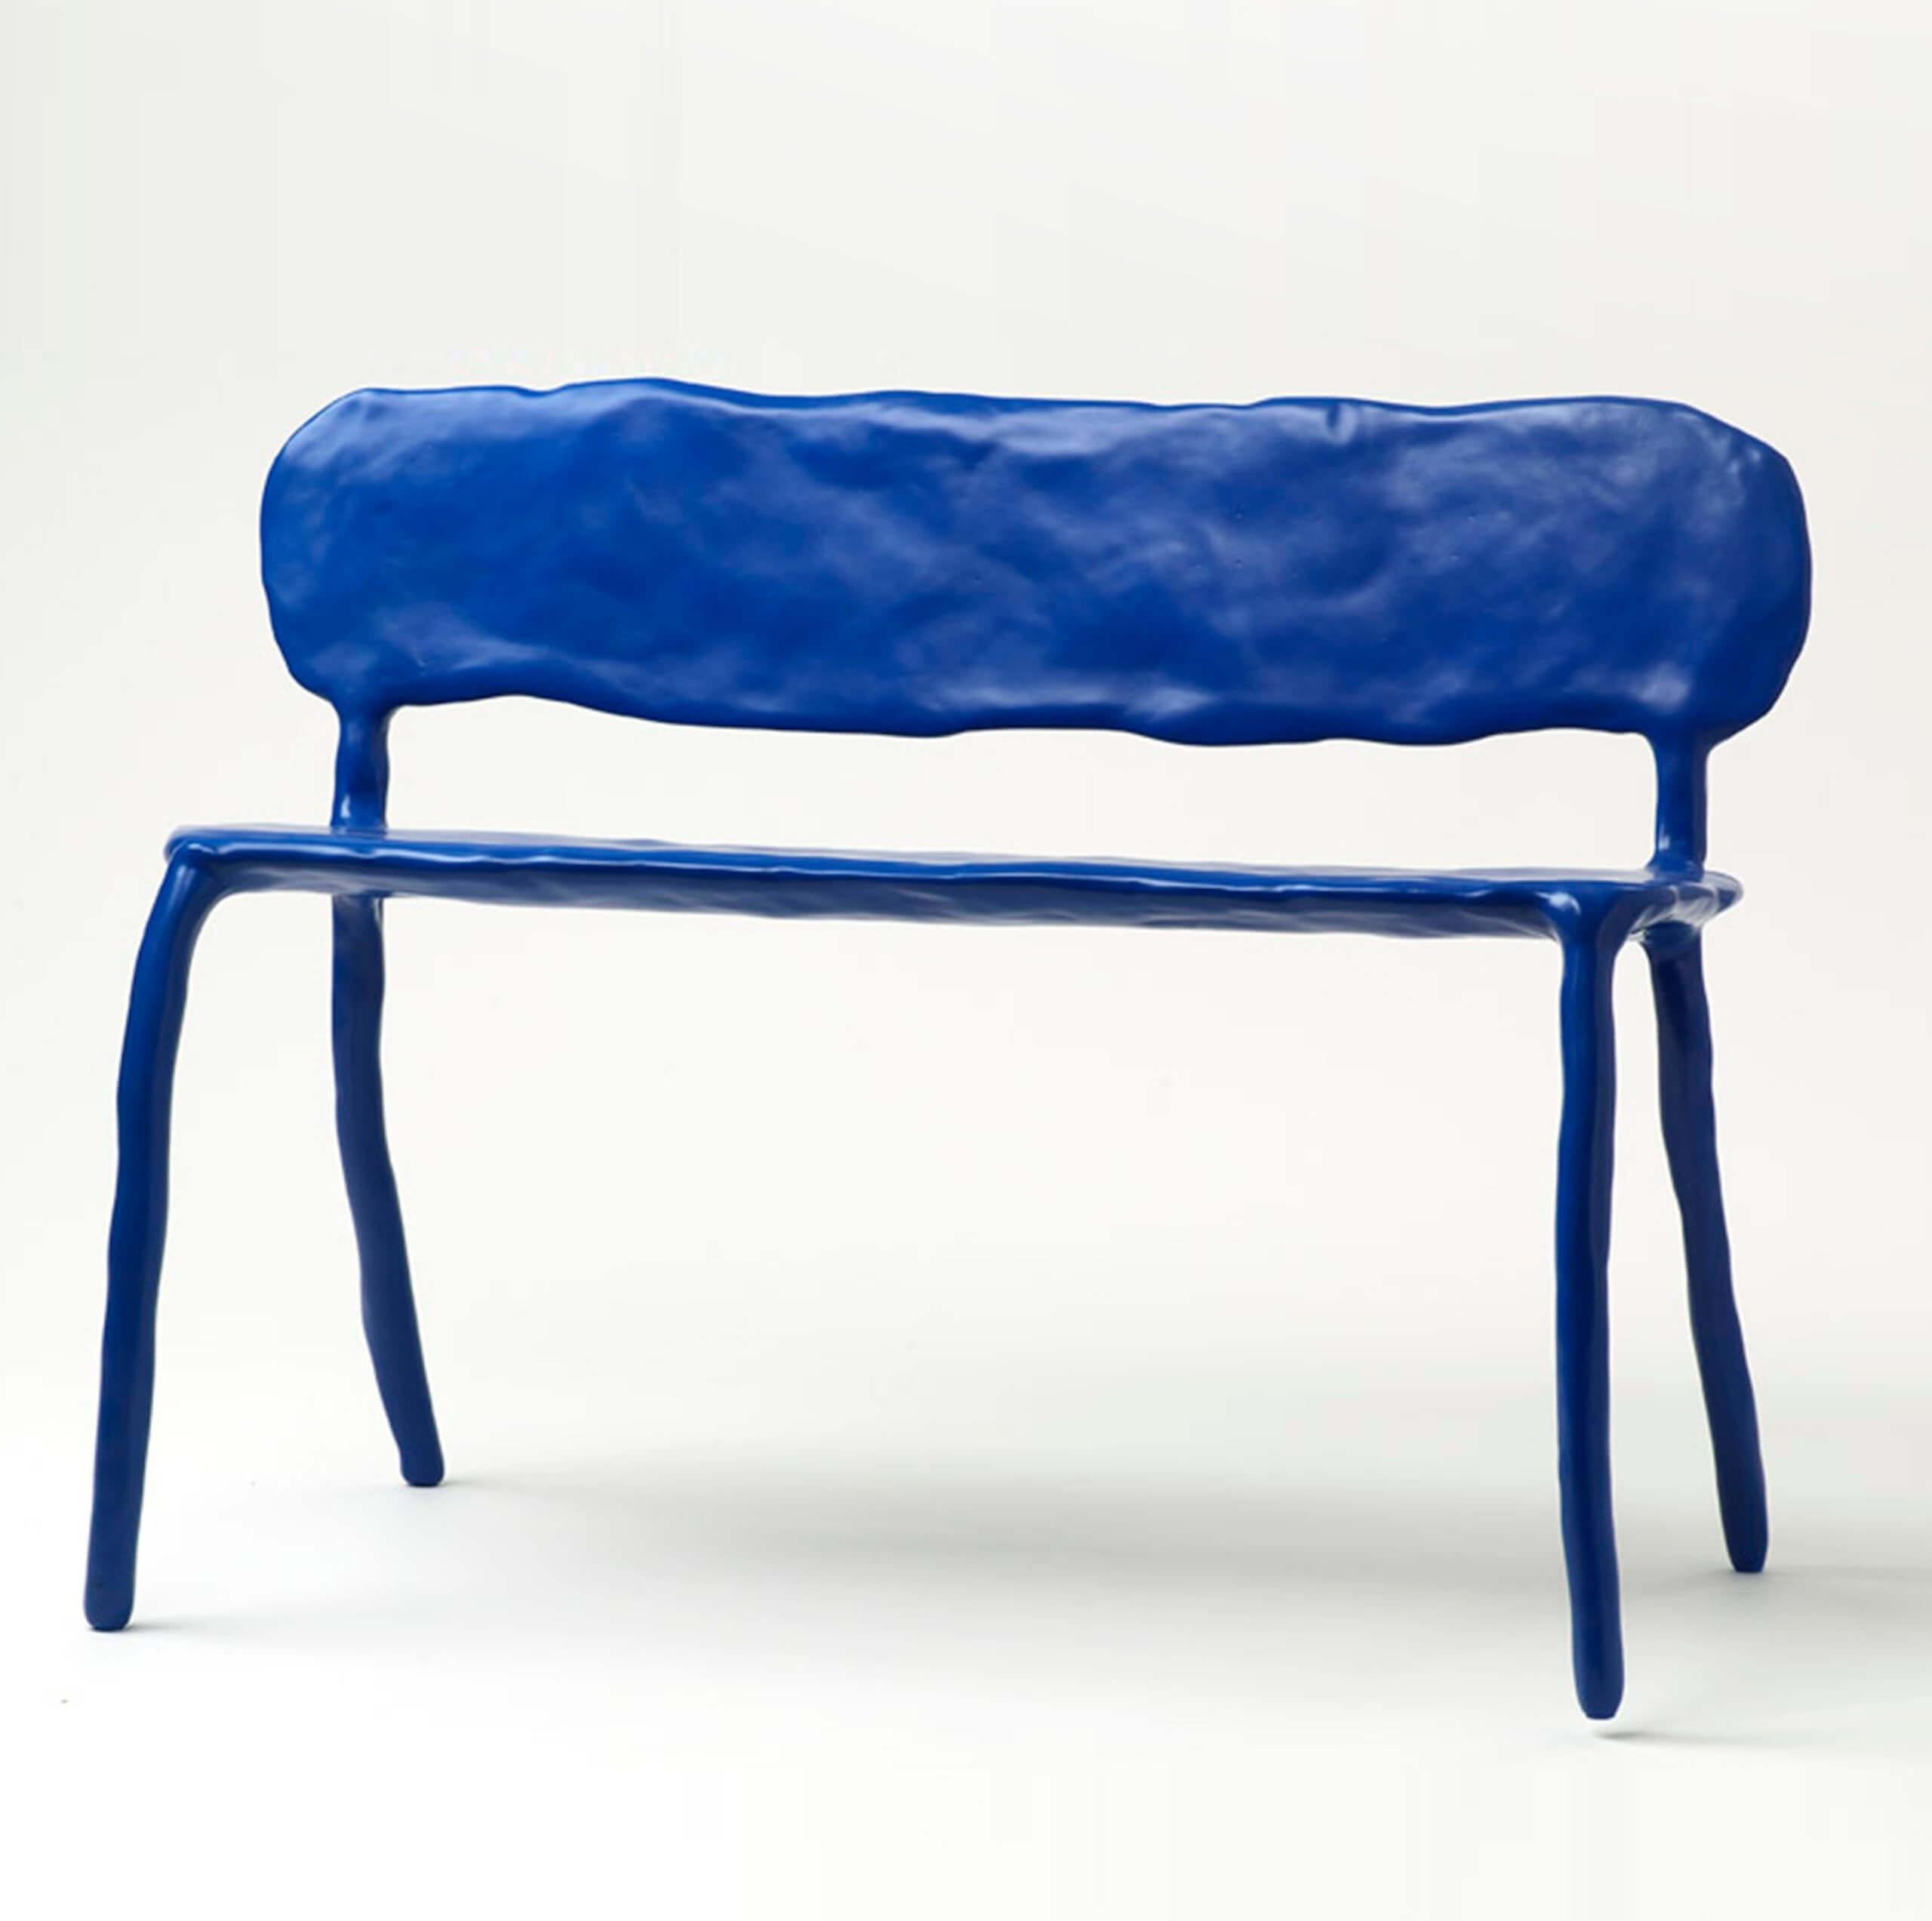 Dutch Contemporary Clay Bench by Maarten Baas For Sale